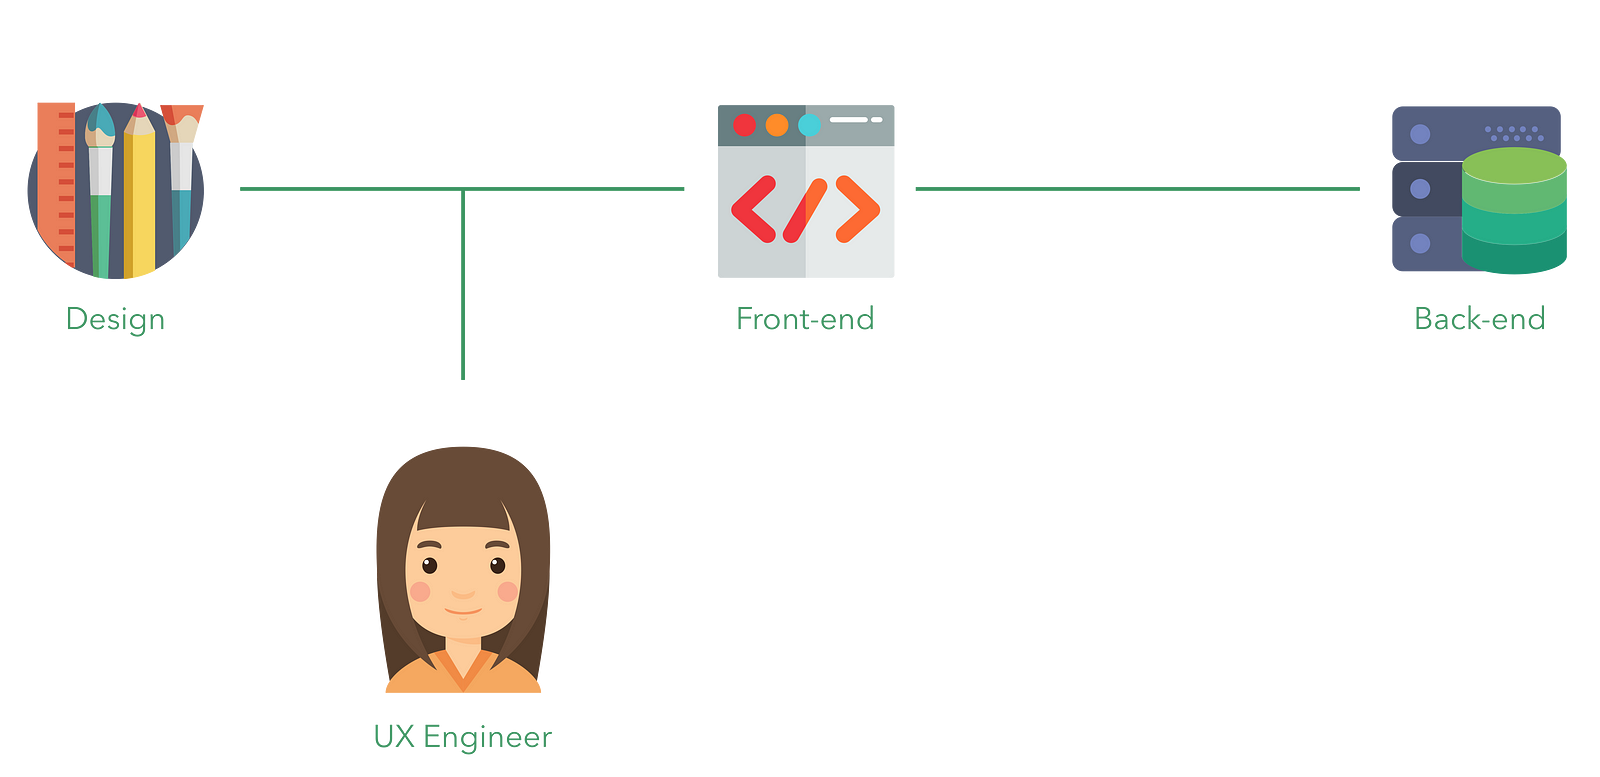 UX Engineer = UX & visual design knowledge + front-end development skills